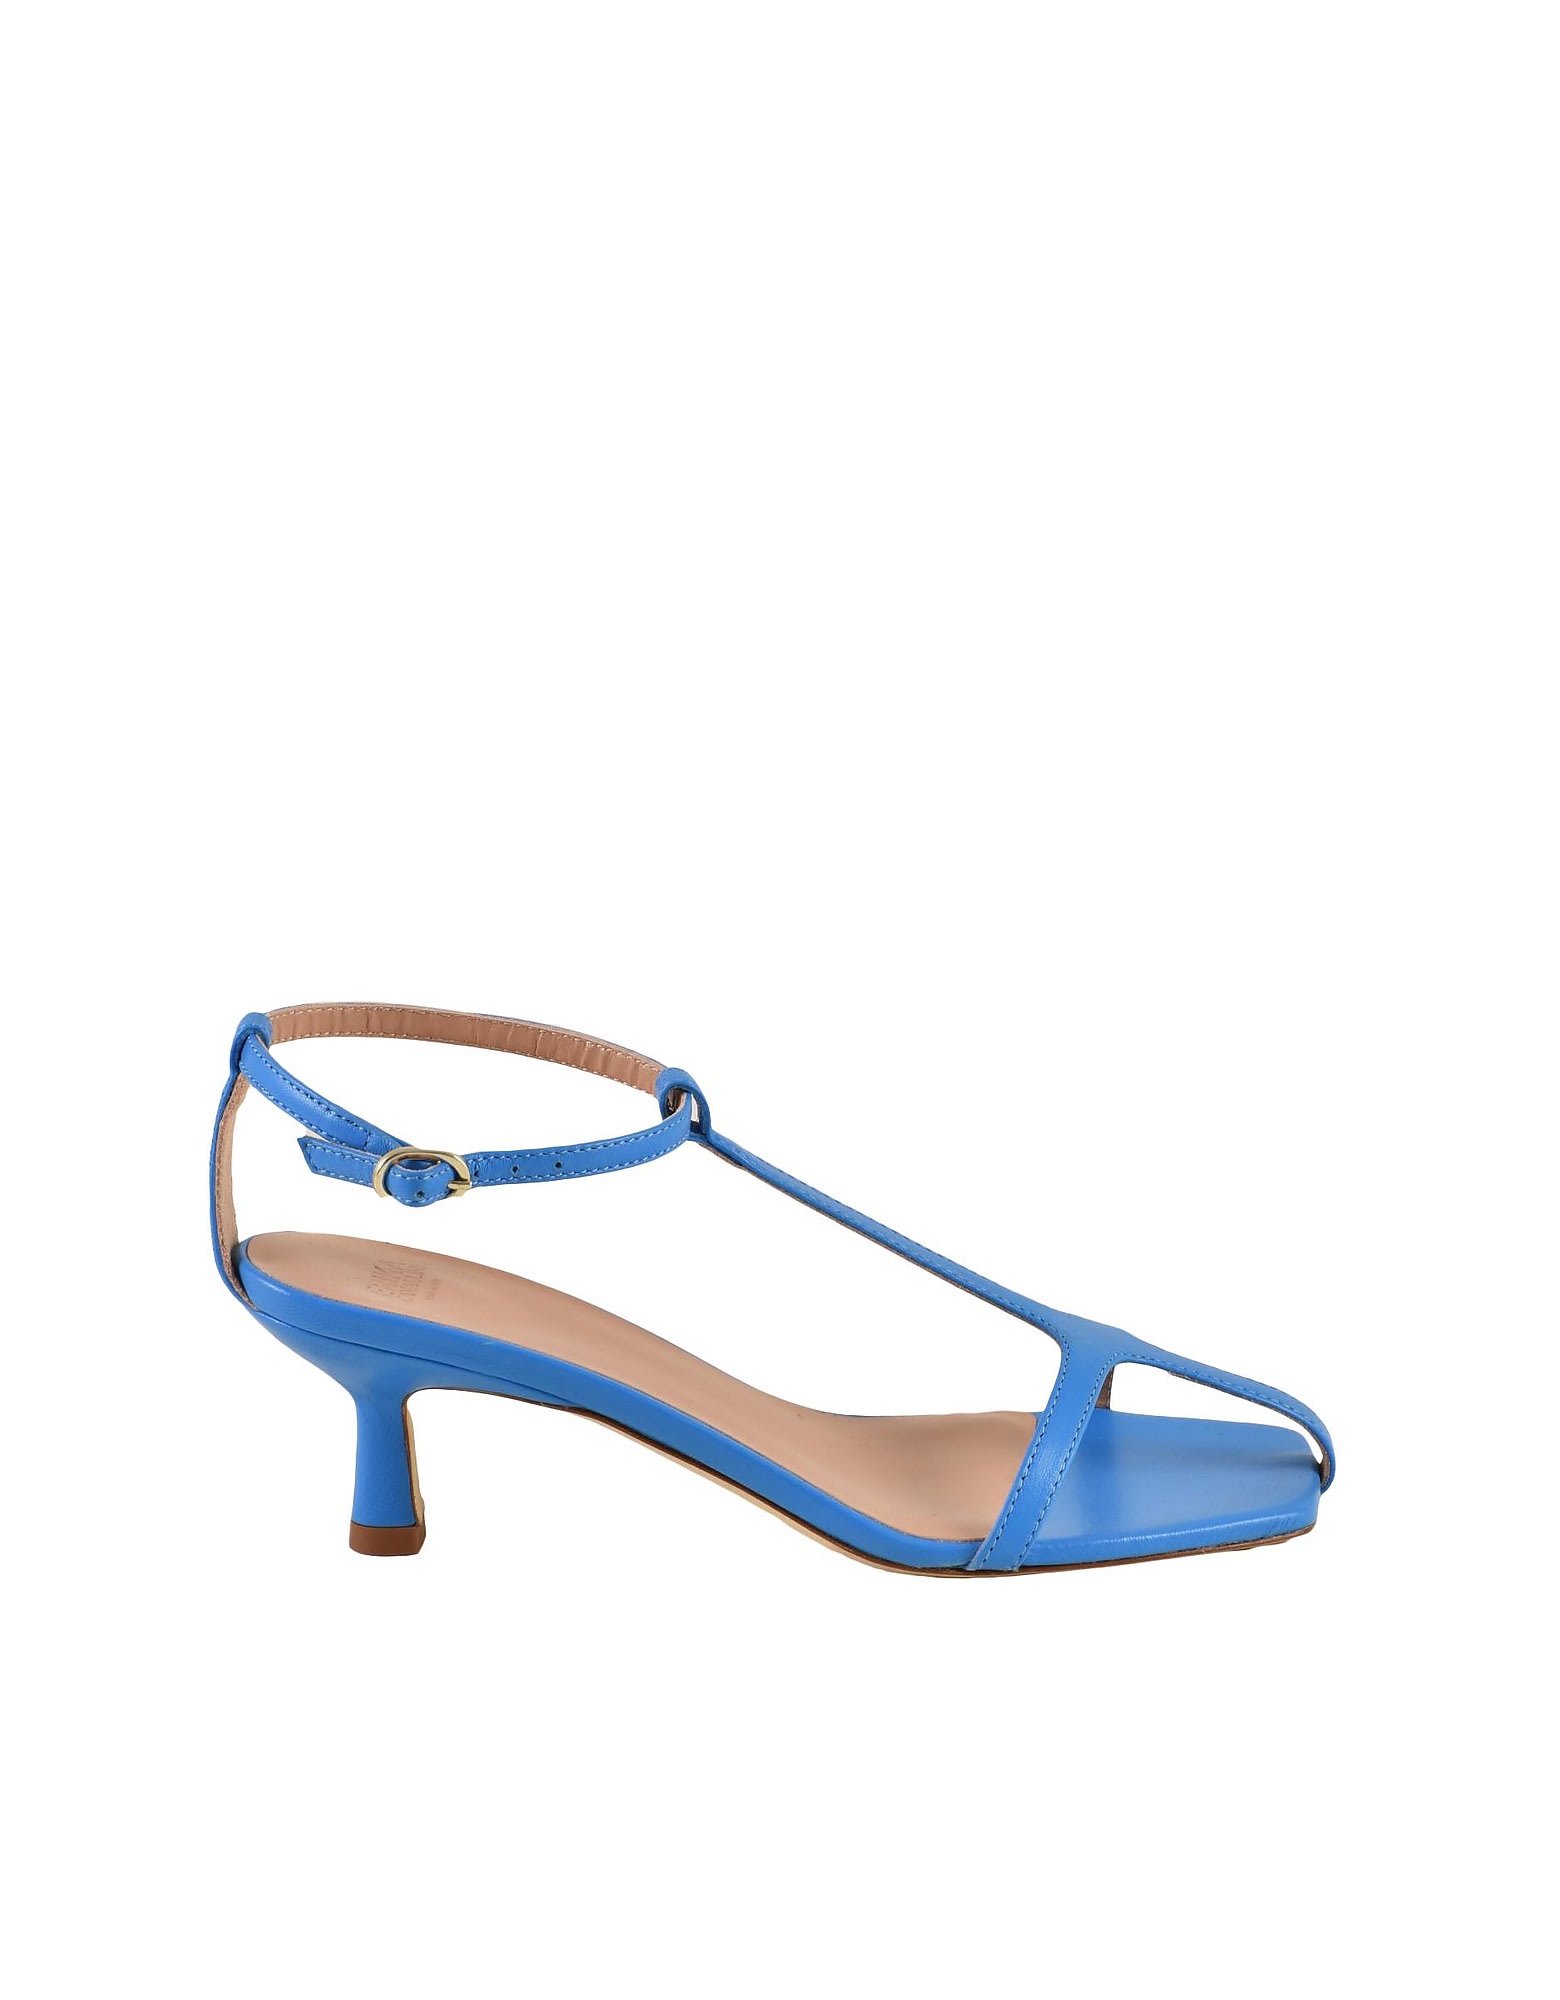 Erika Cavallini Womens Light Blue Sandals